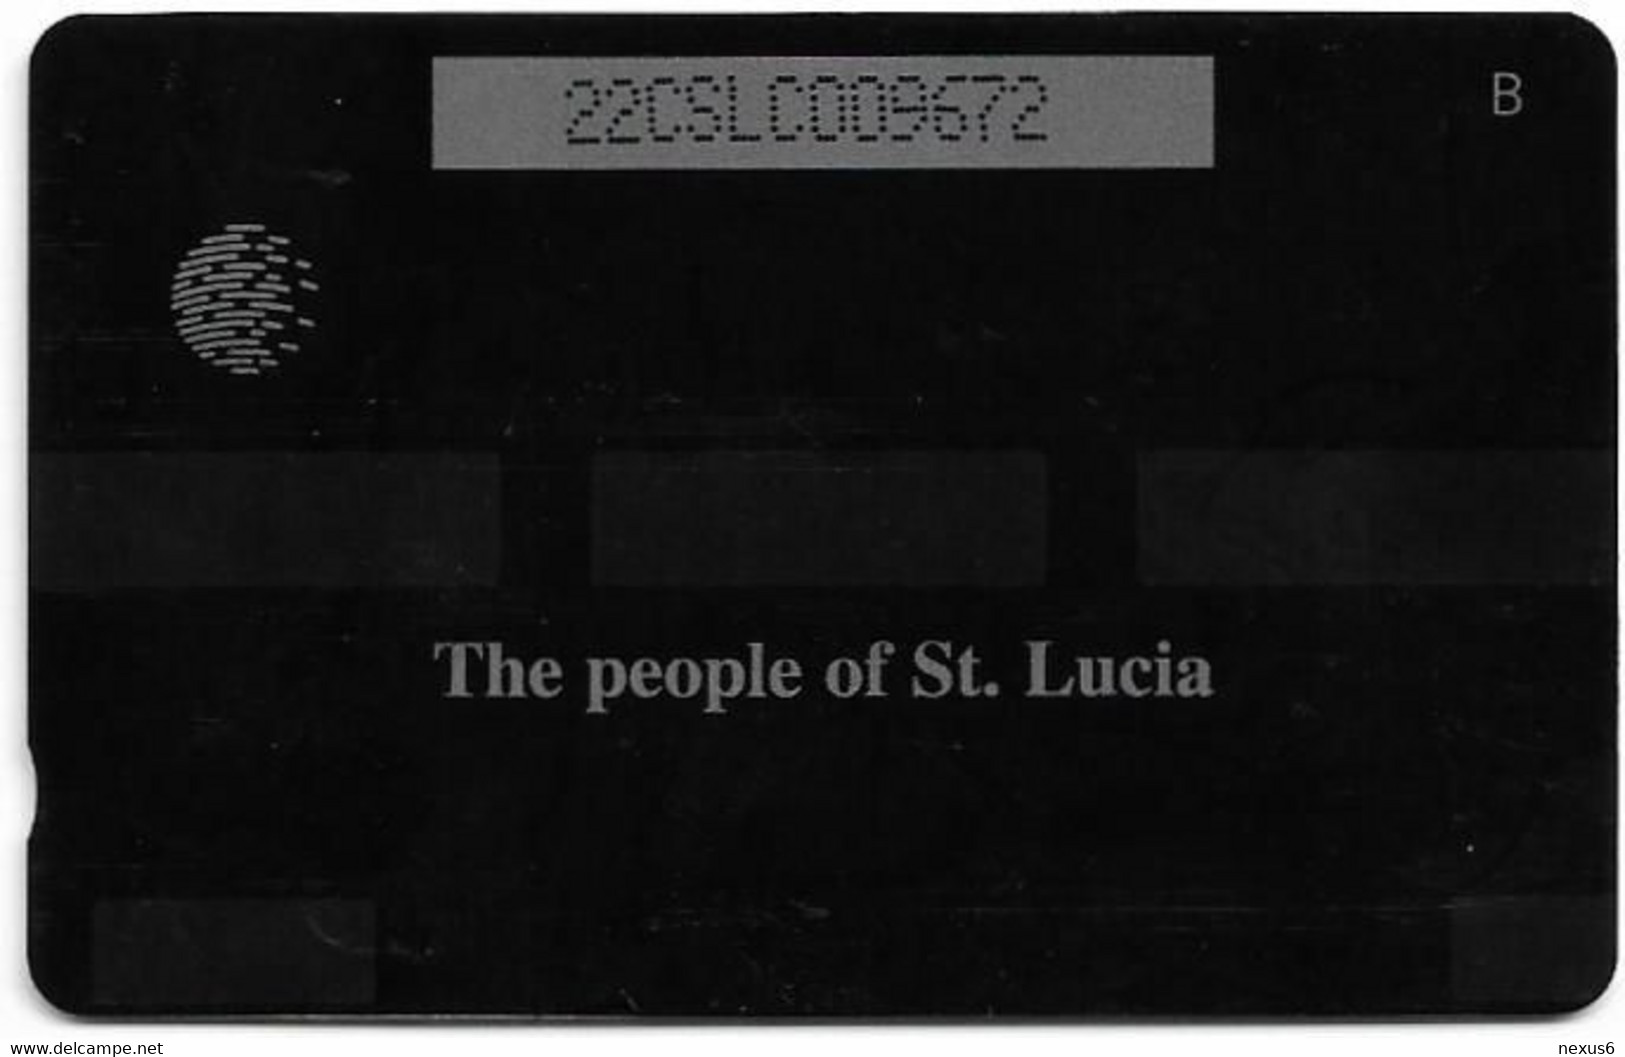 St. Lucia - People Of St. Lucia, Diamond Falls - 22CSLC - 1995, 19.900ex, Used - St. Lucia